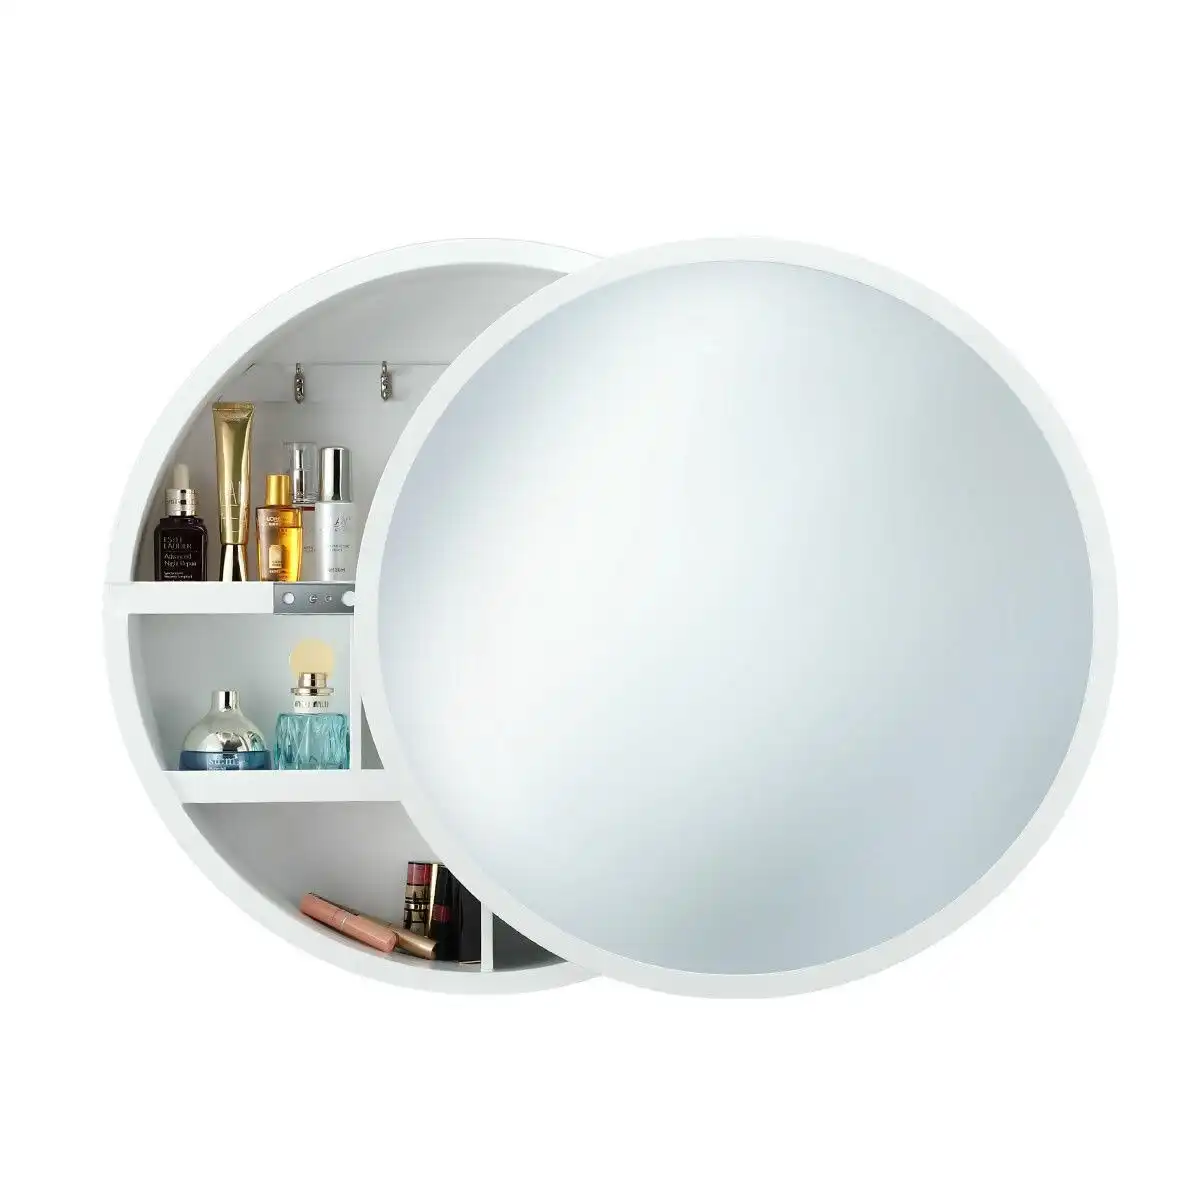 Ausway Bathroom Medicine Cabinet Mirror Vanity Round Wall Mirrored Cupboard with Storage Sliding Door White 60cm Diameter